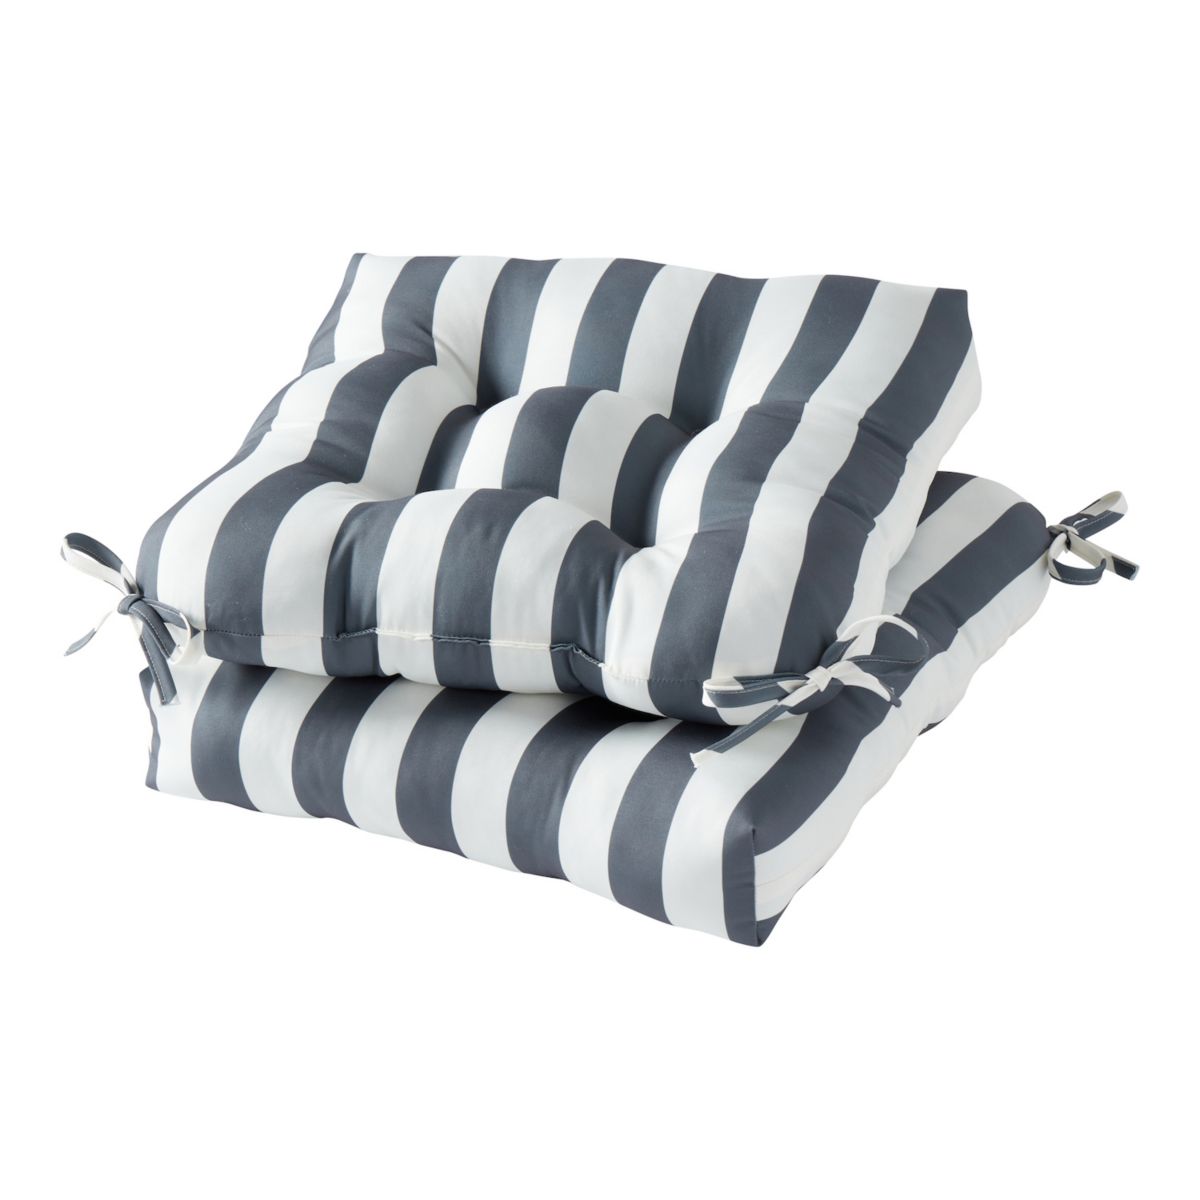 Seaswirl striper seat cushions